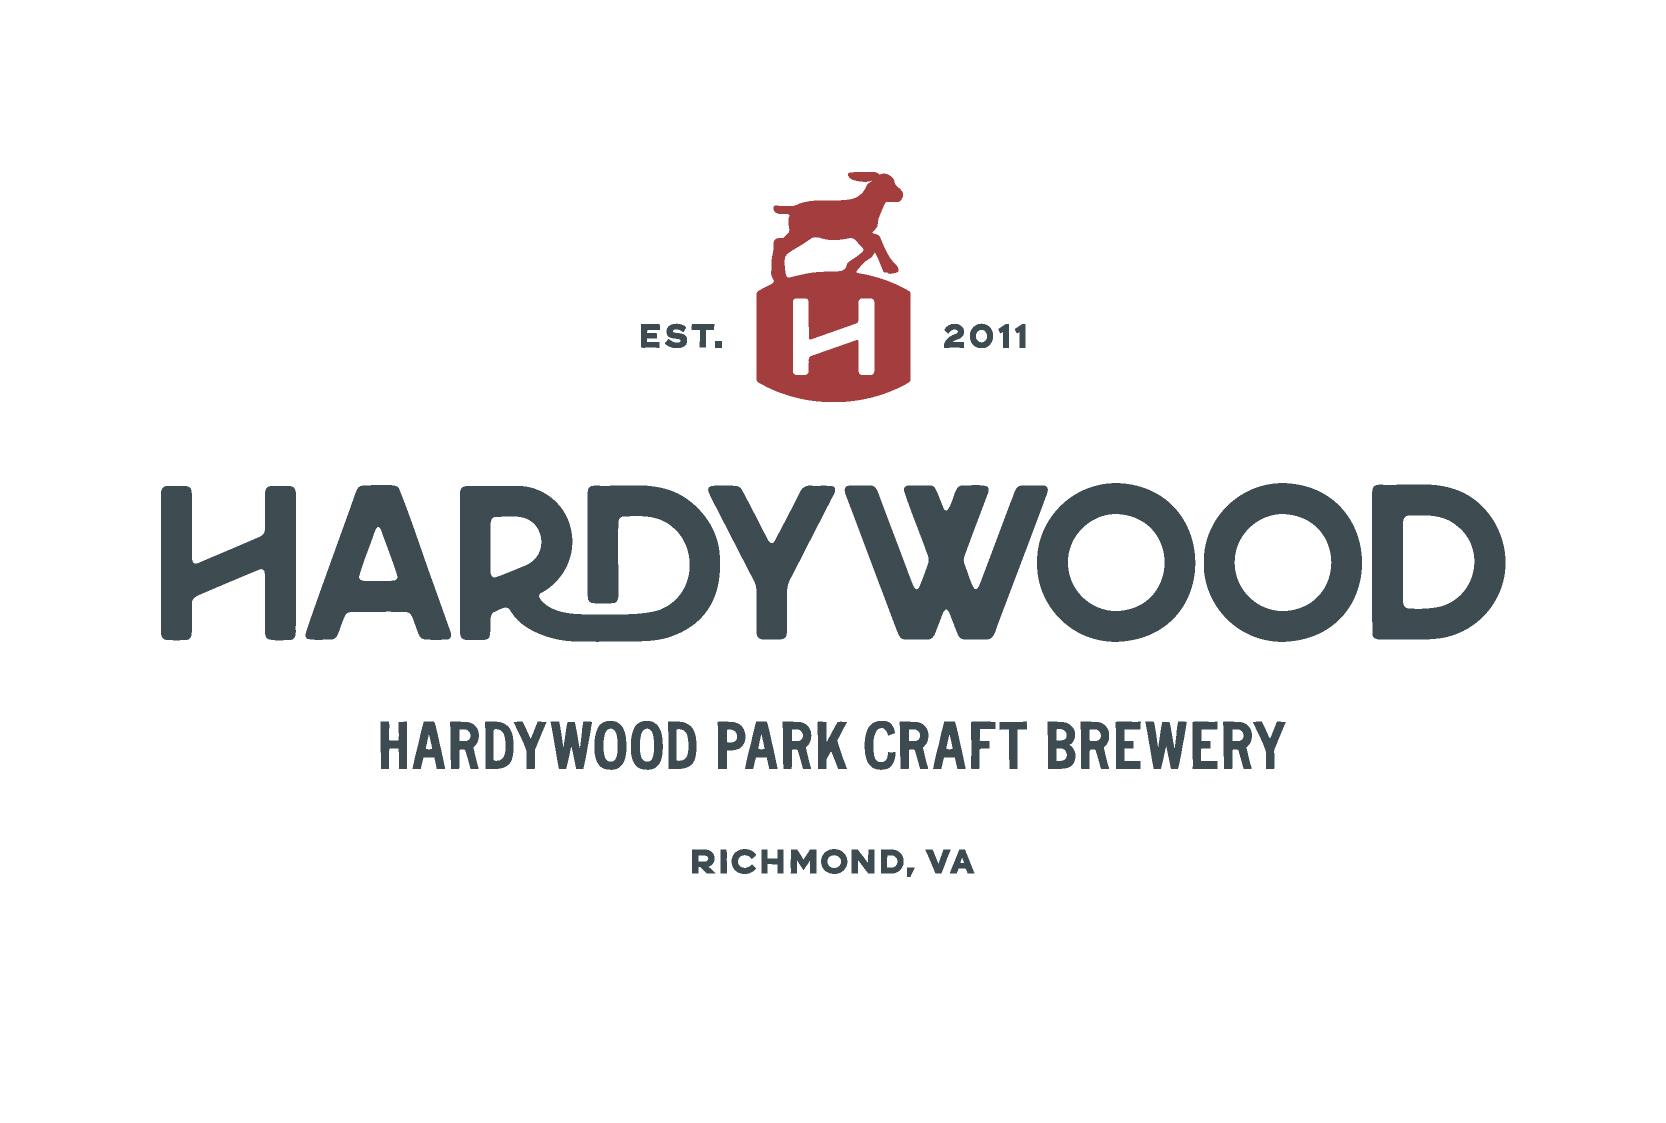 Hardywood Park Craft Brewery Rebrand